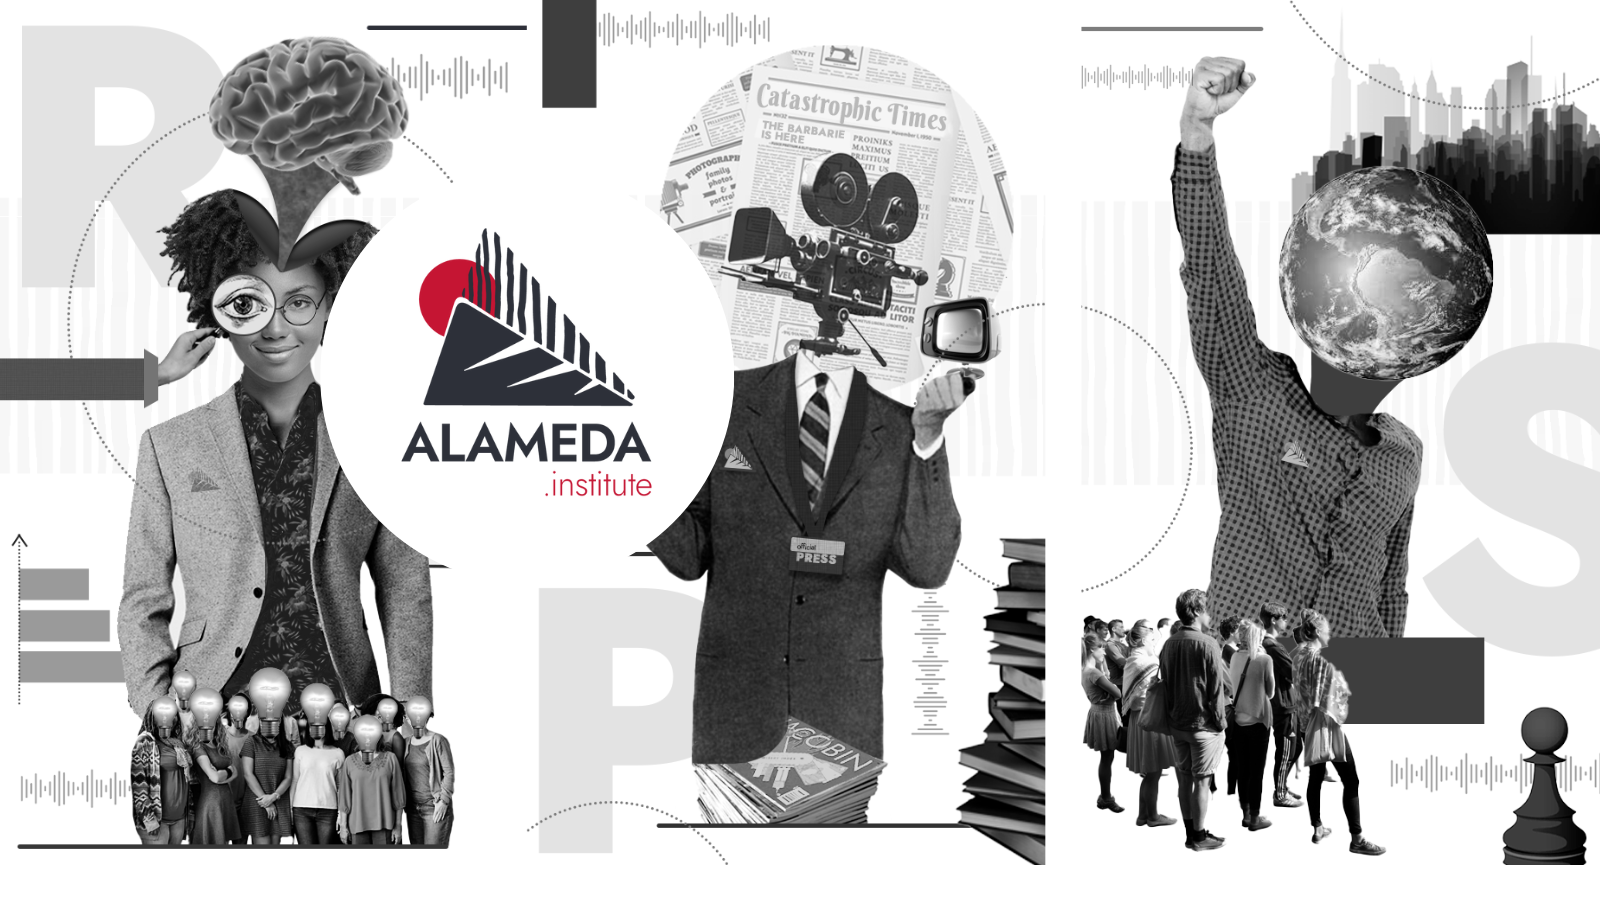 Alameda Institute